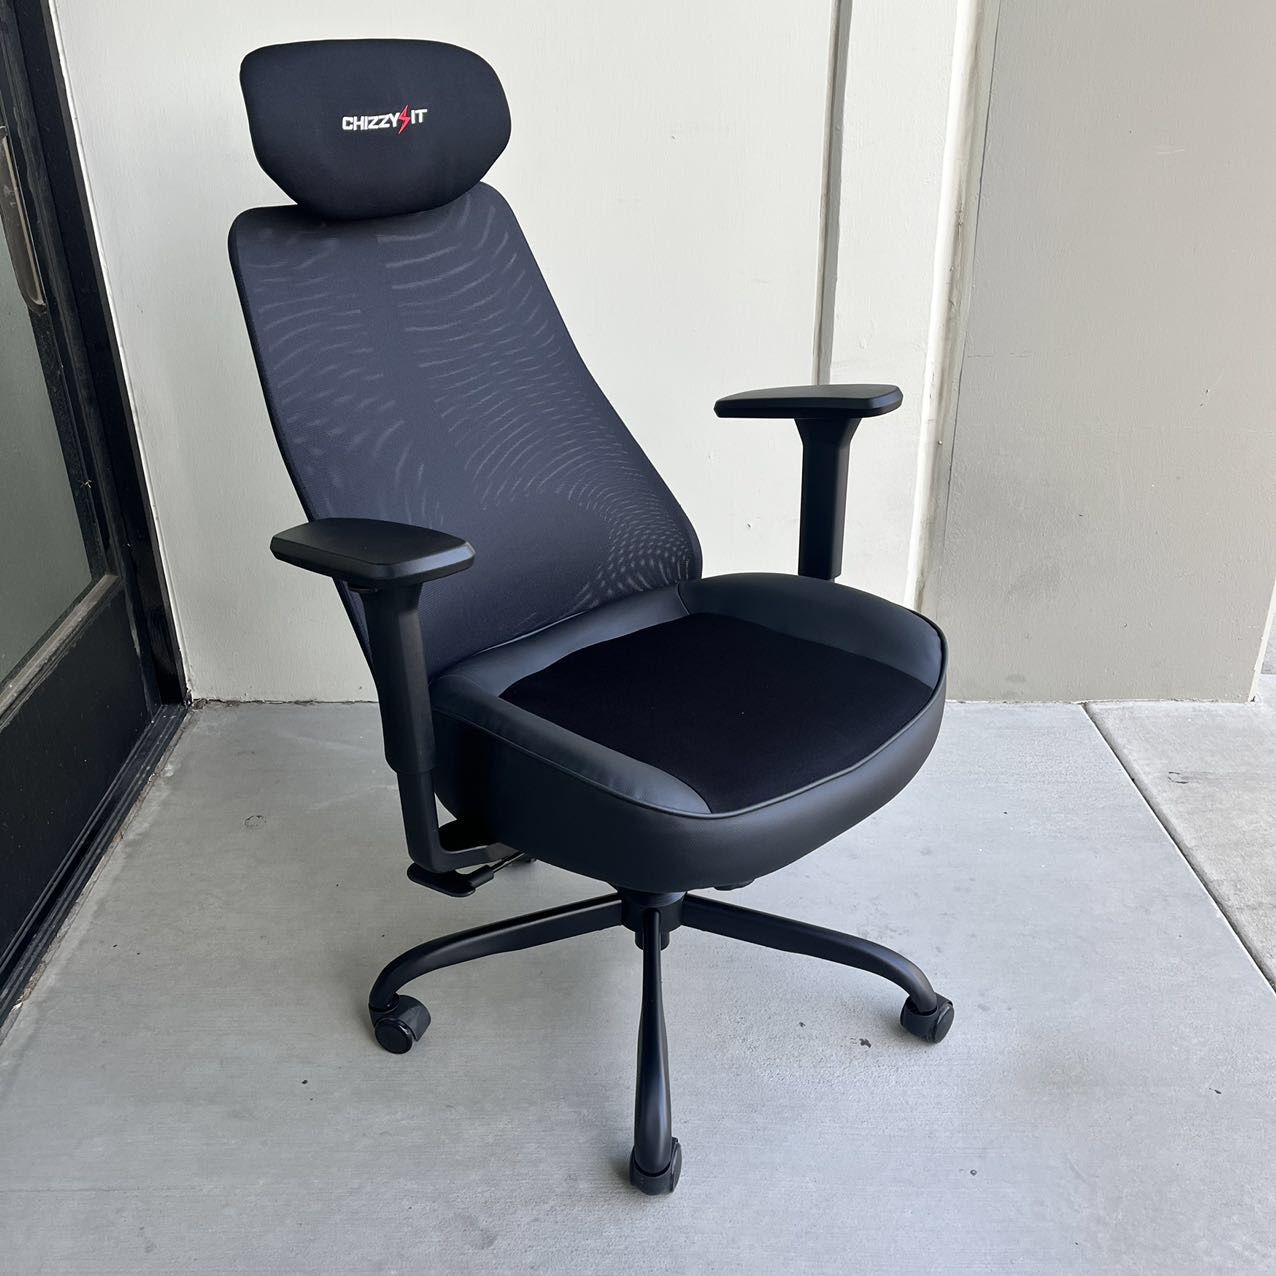 New In Box Premium Computer Mesh High Back Ergonomic Desk Chair With Tilt Lock Black Office Furniture 